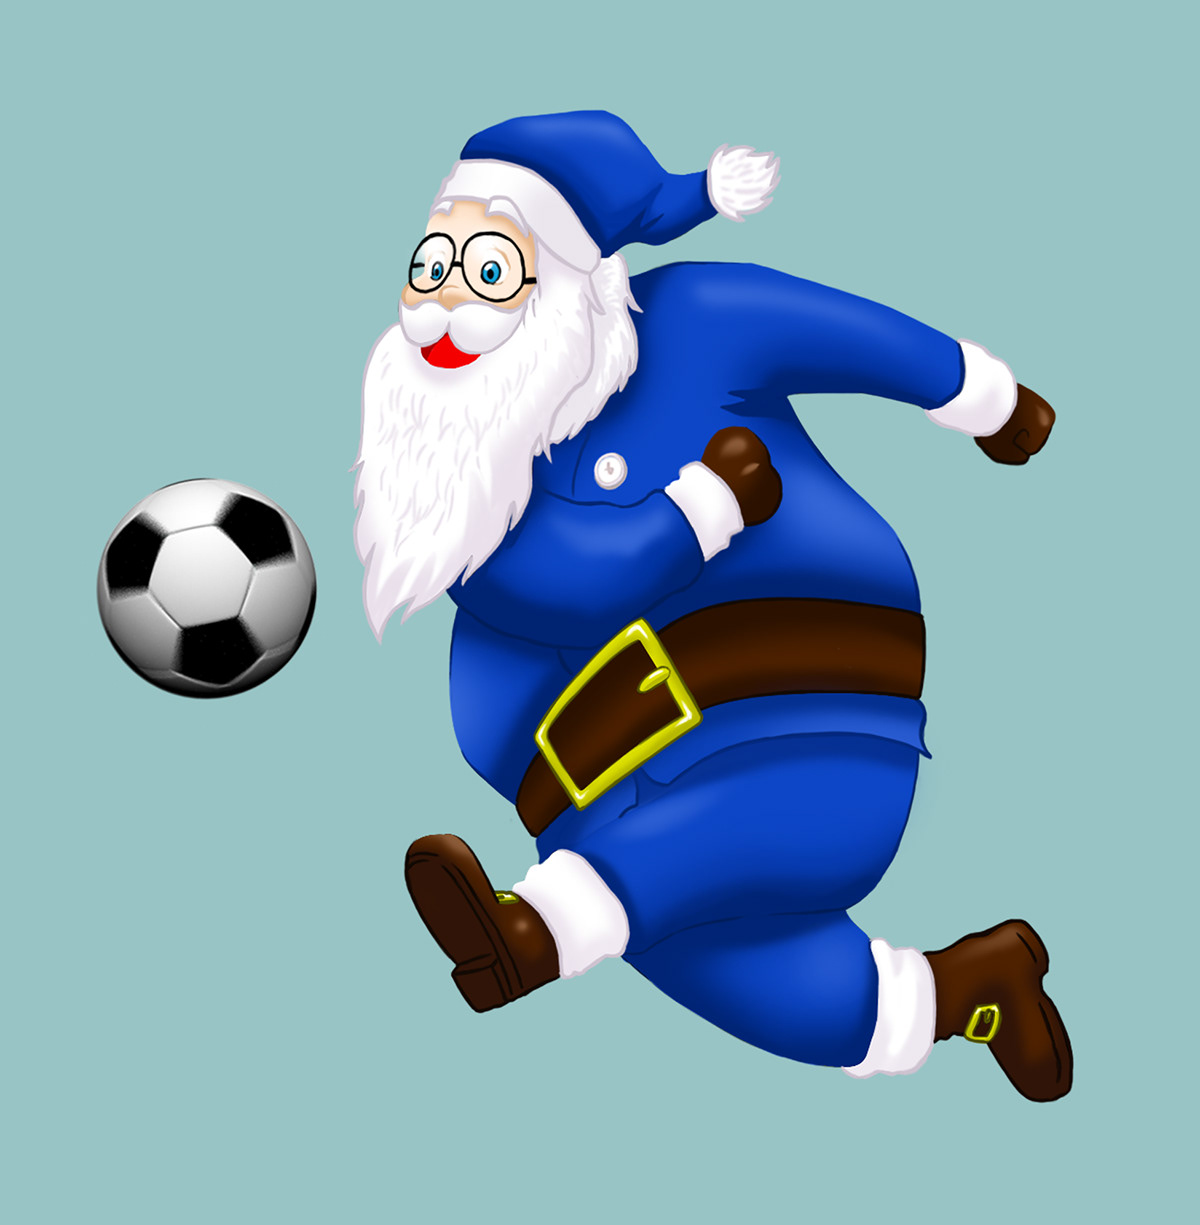 santa claus Papai Noel papai noel futebol campanha de AZUL goleiro campaign soccer football blue